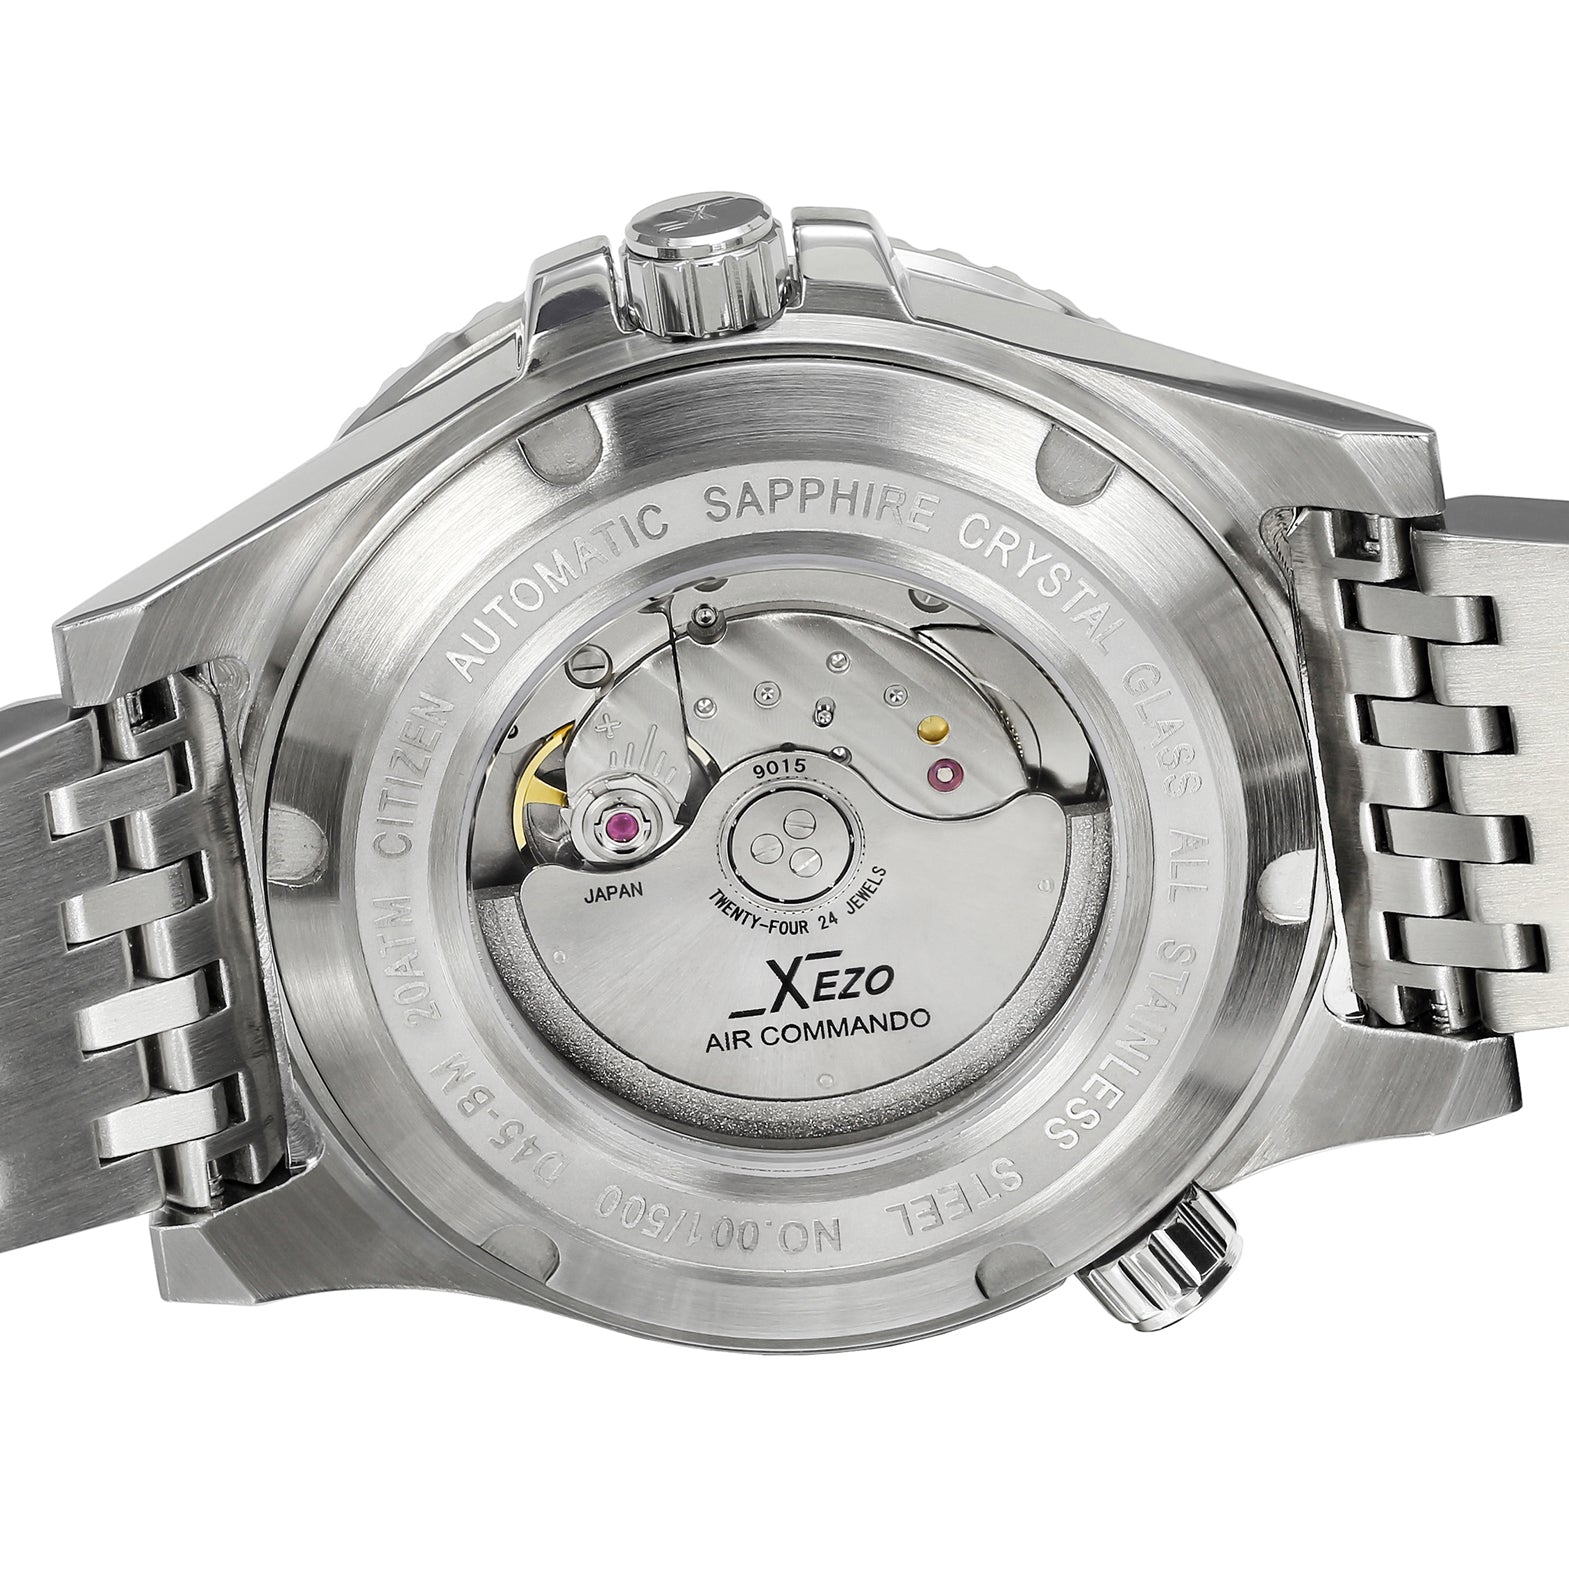 Xezo - Case back of the Air Commando D45-BM watch